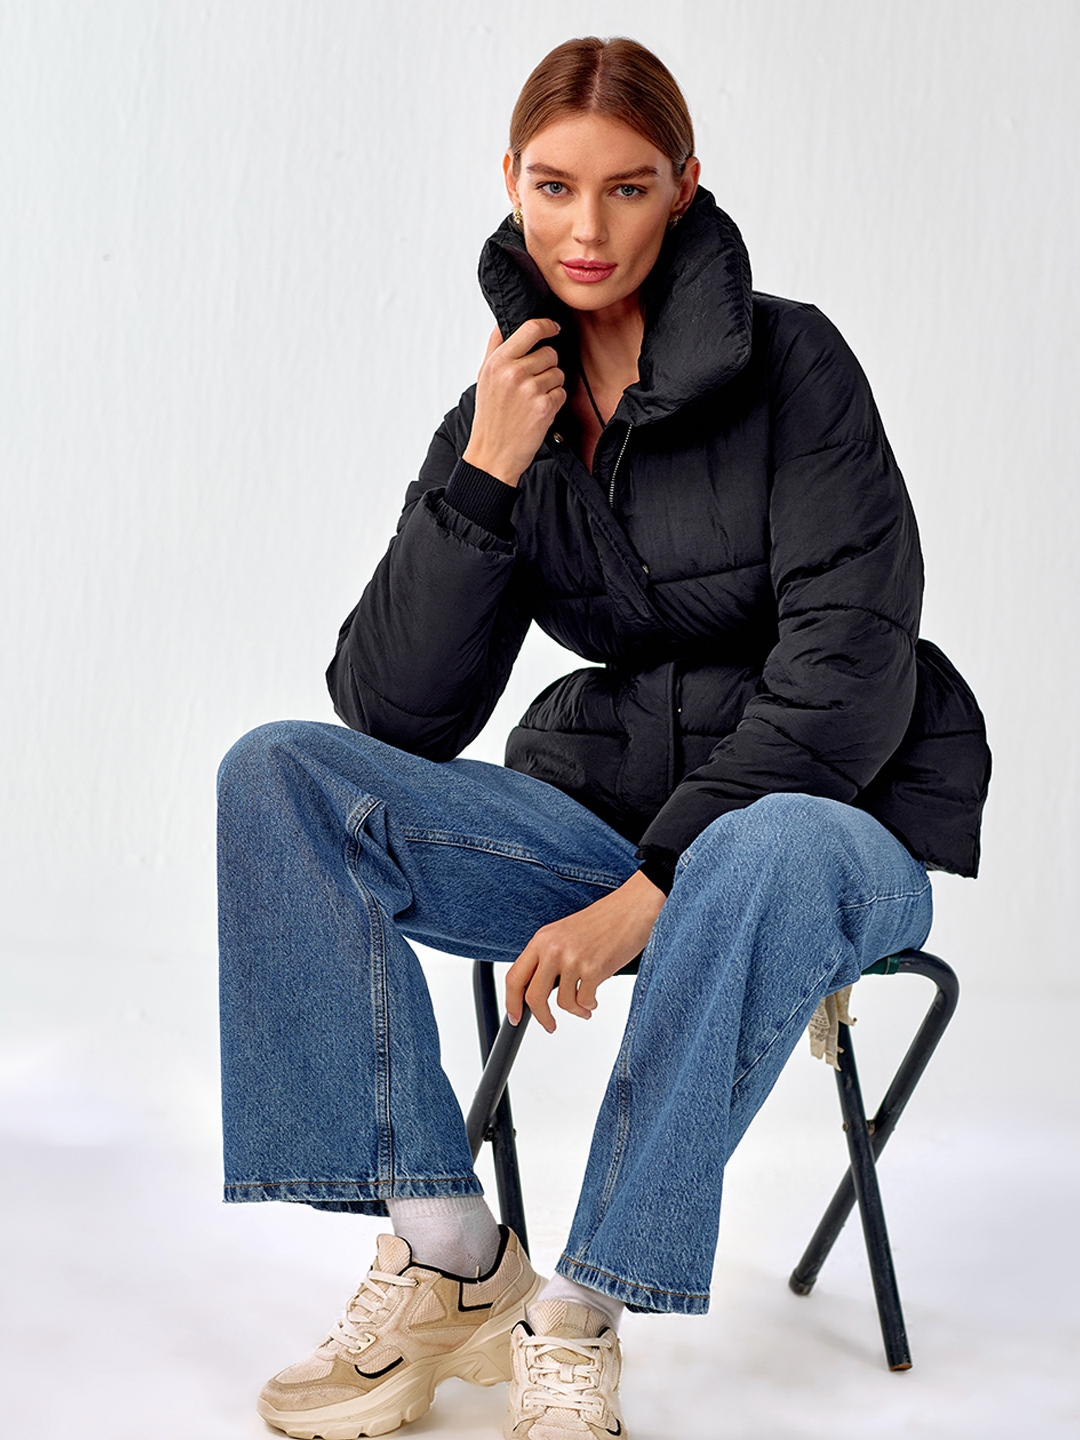 Black Slim-Fit Ladies Jacket Club Collar Handmade Quilted Shoulder Des